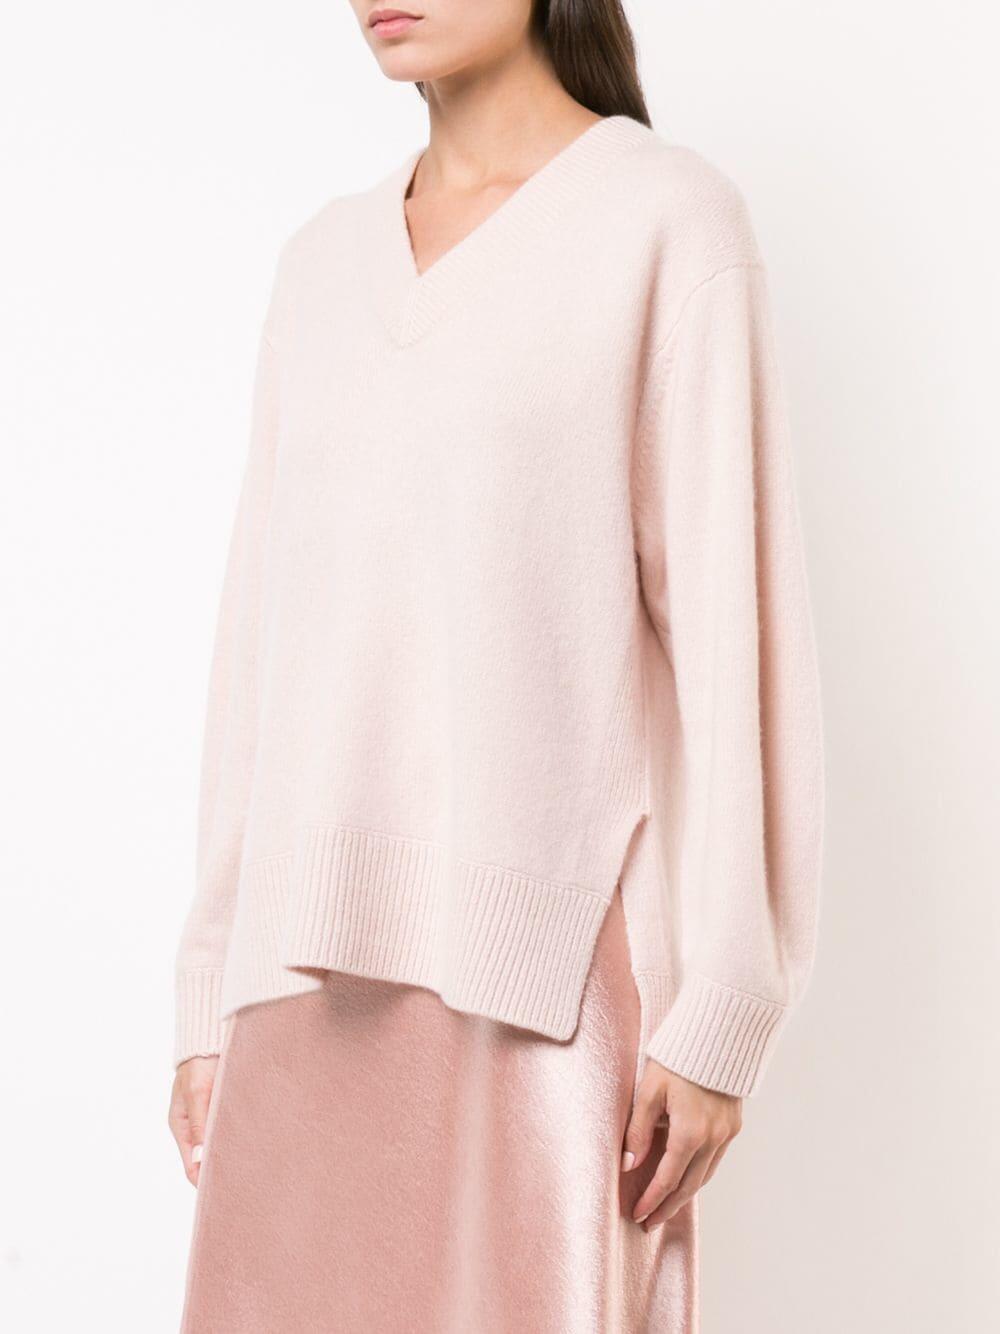 VINCE Desert Rose Cashmere V-Neck Sweater- Size Medium